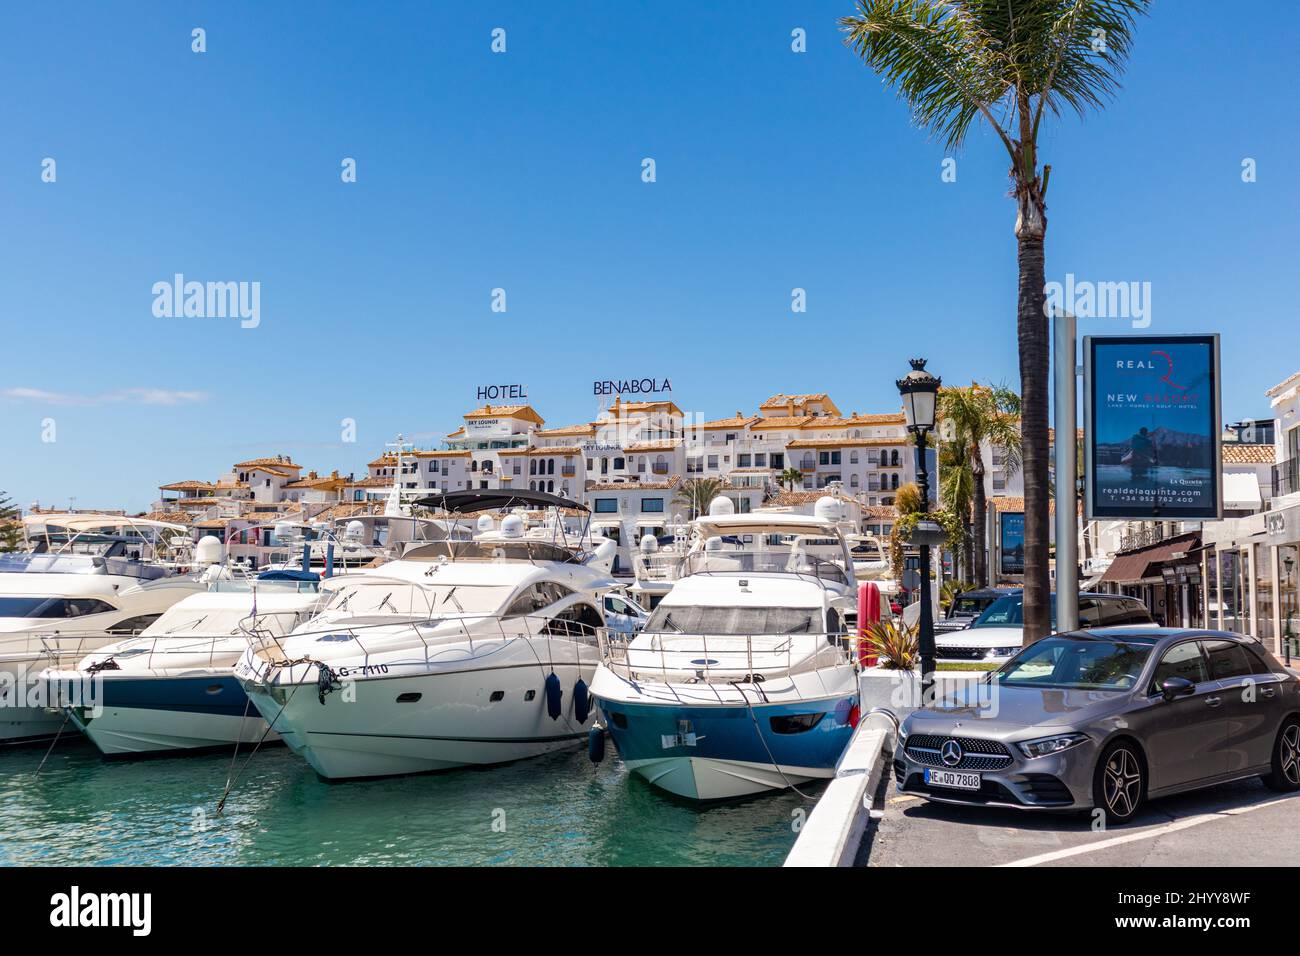 Puerto banus marbella shopping hi-res stock photography and images - Alamy